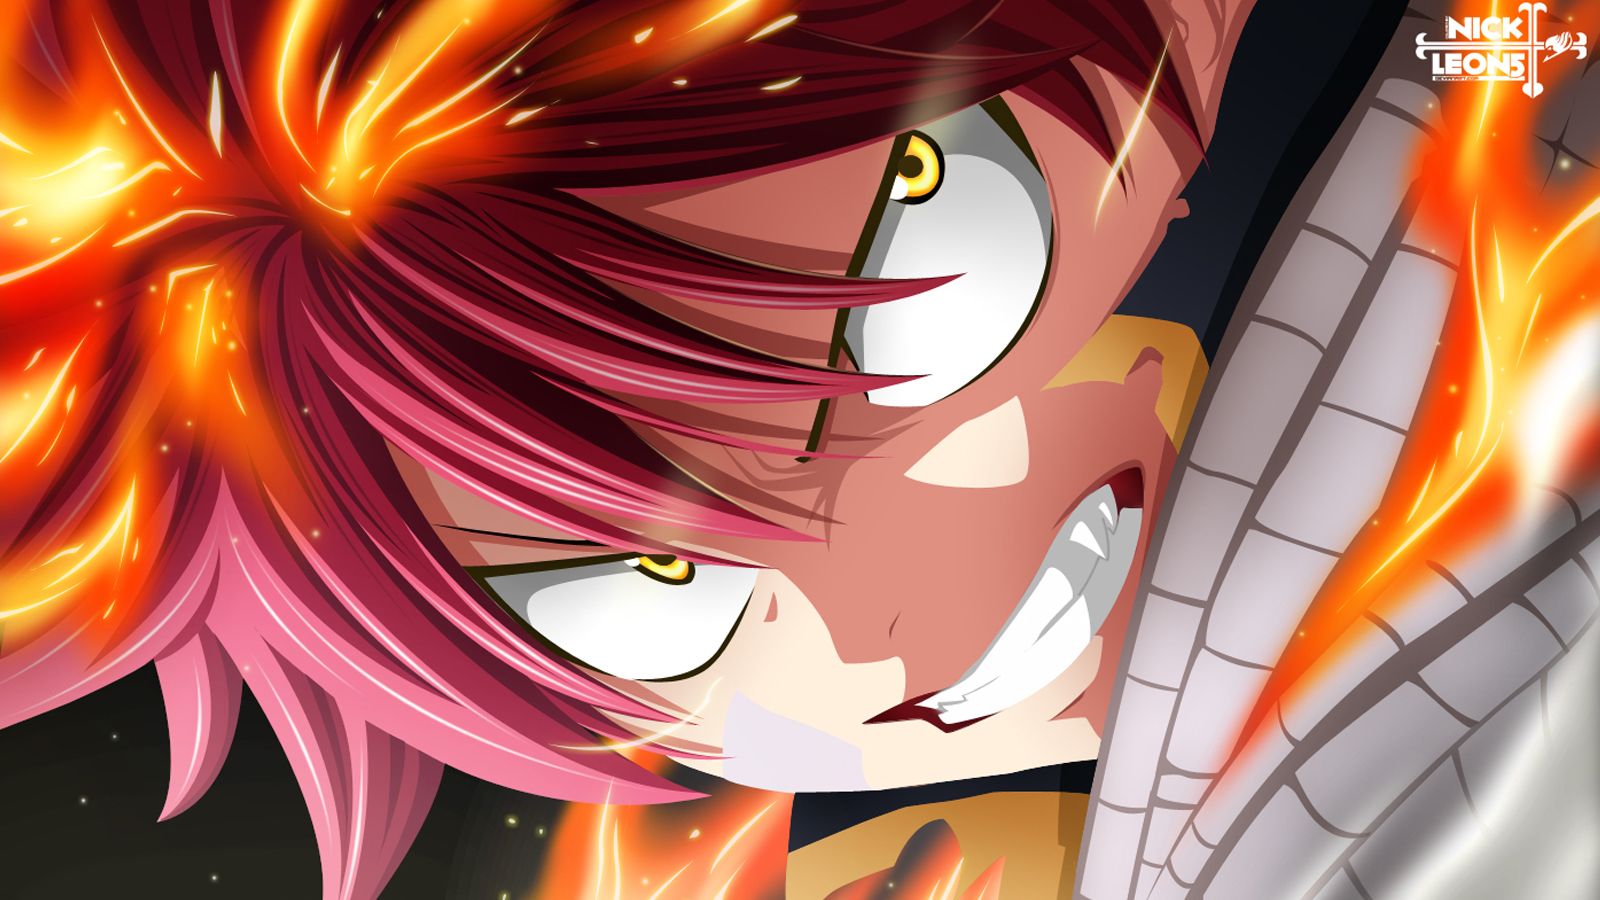 Free download Natsu Dragneel Anime Image 4c Wallpaper HD 1600x900